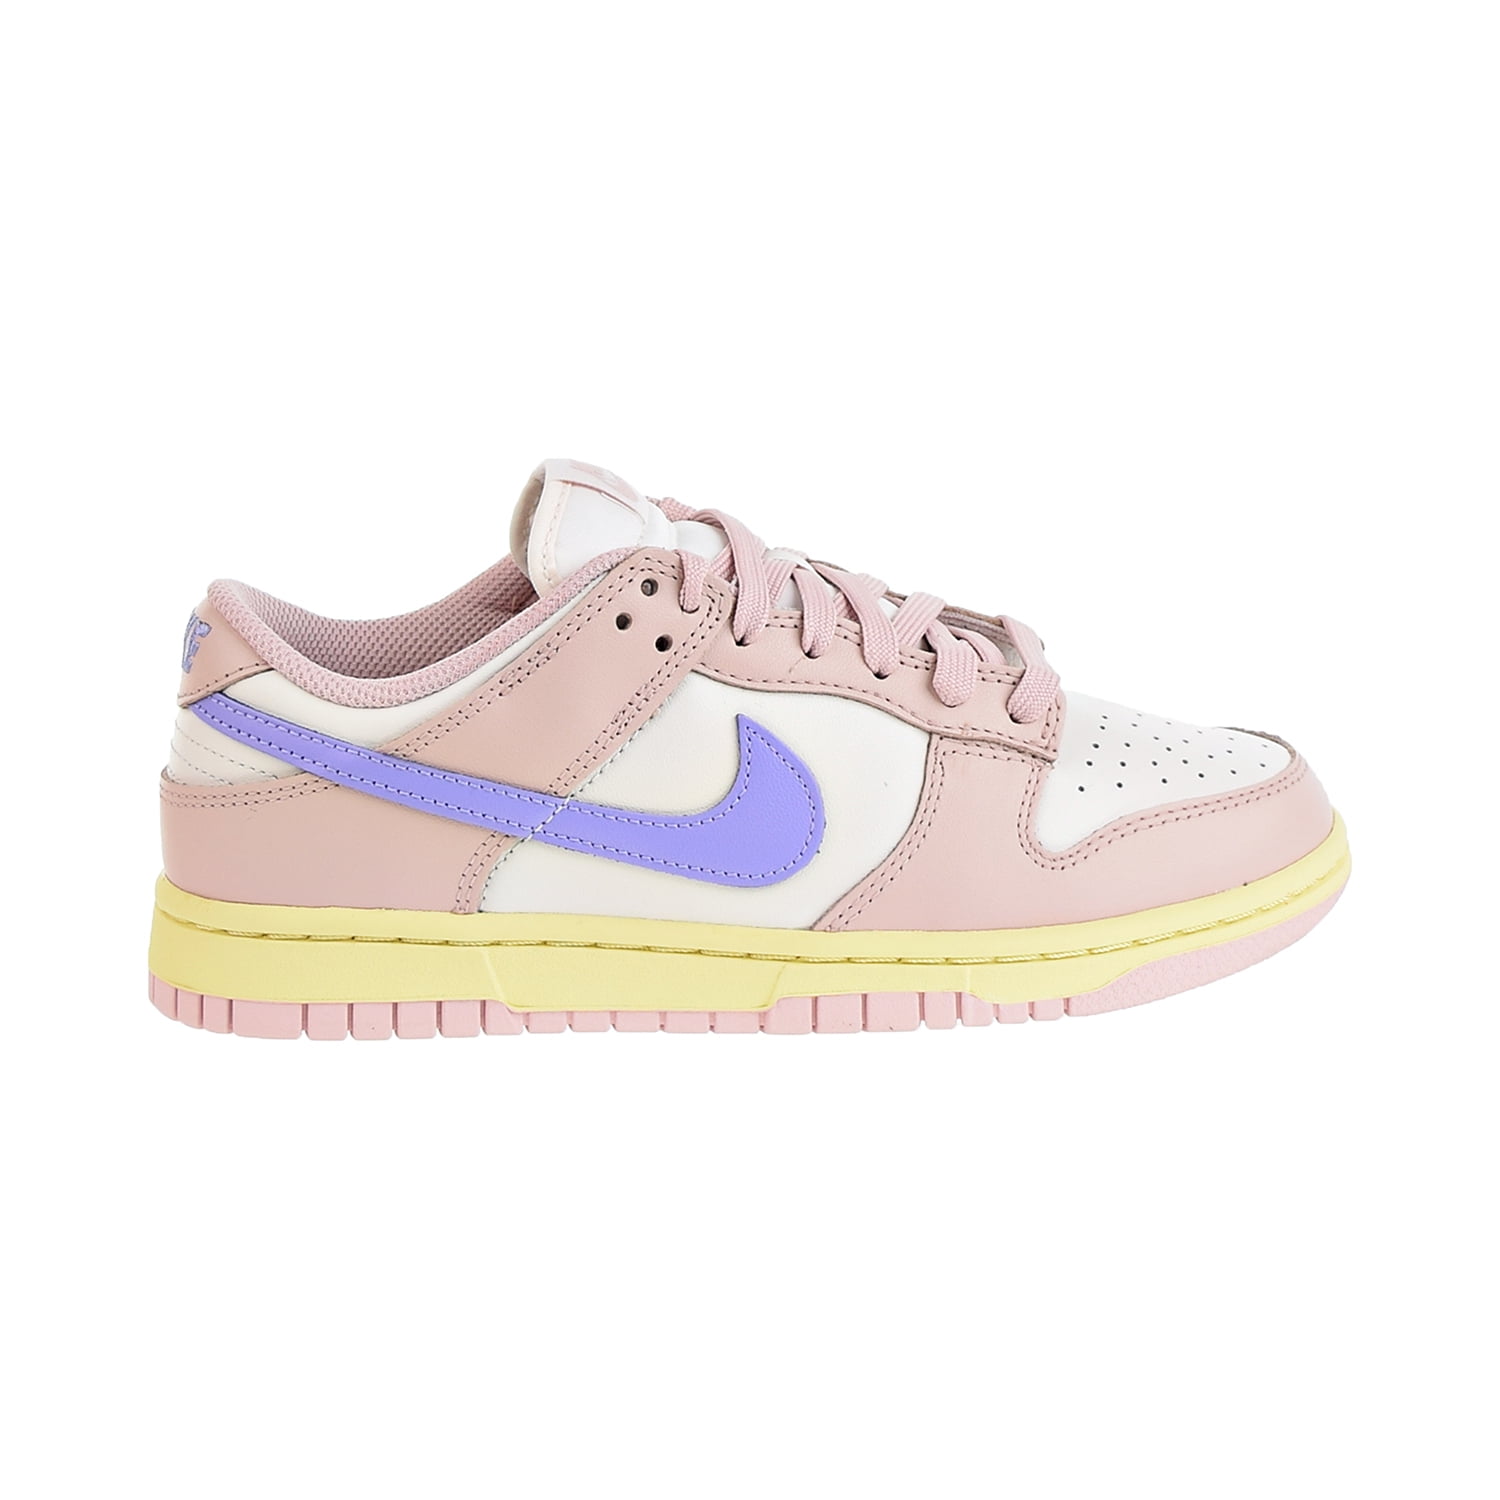 Nike Dunk Low Women's Shoes Pink Oxford-Light Thistle-Phantom dd1503-601